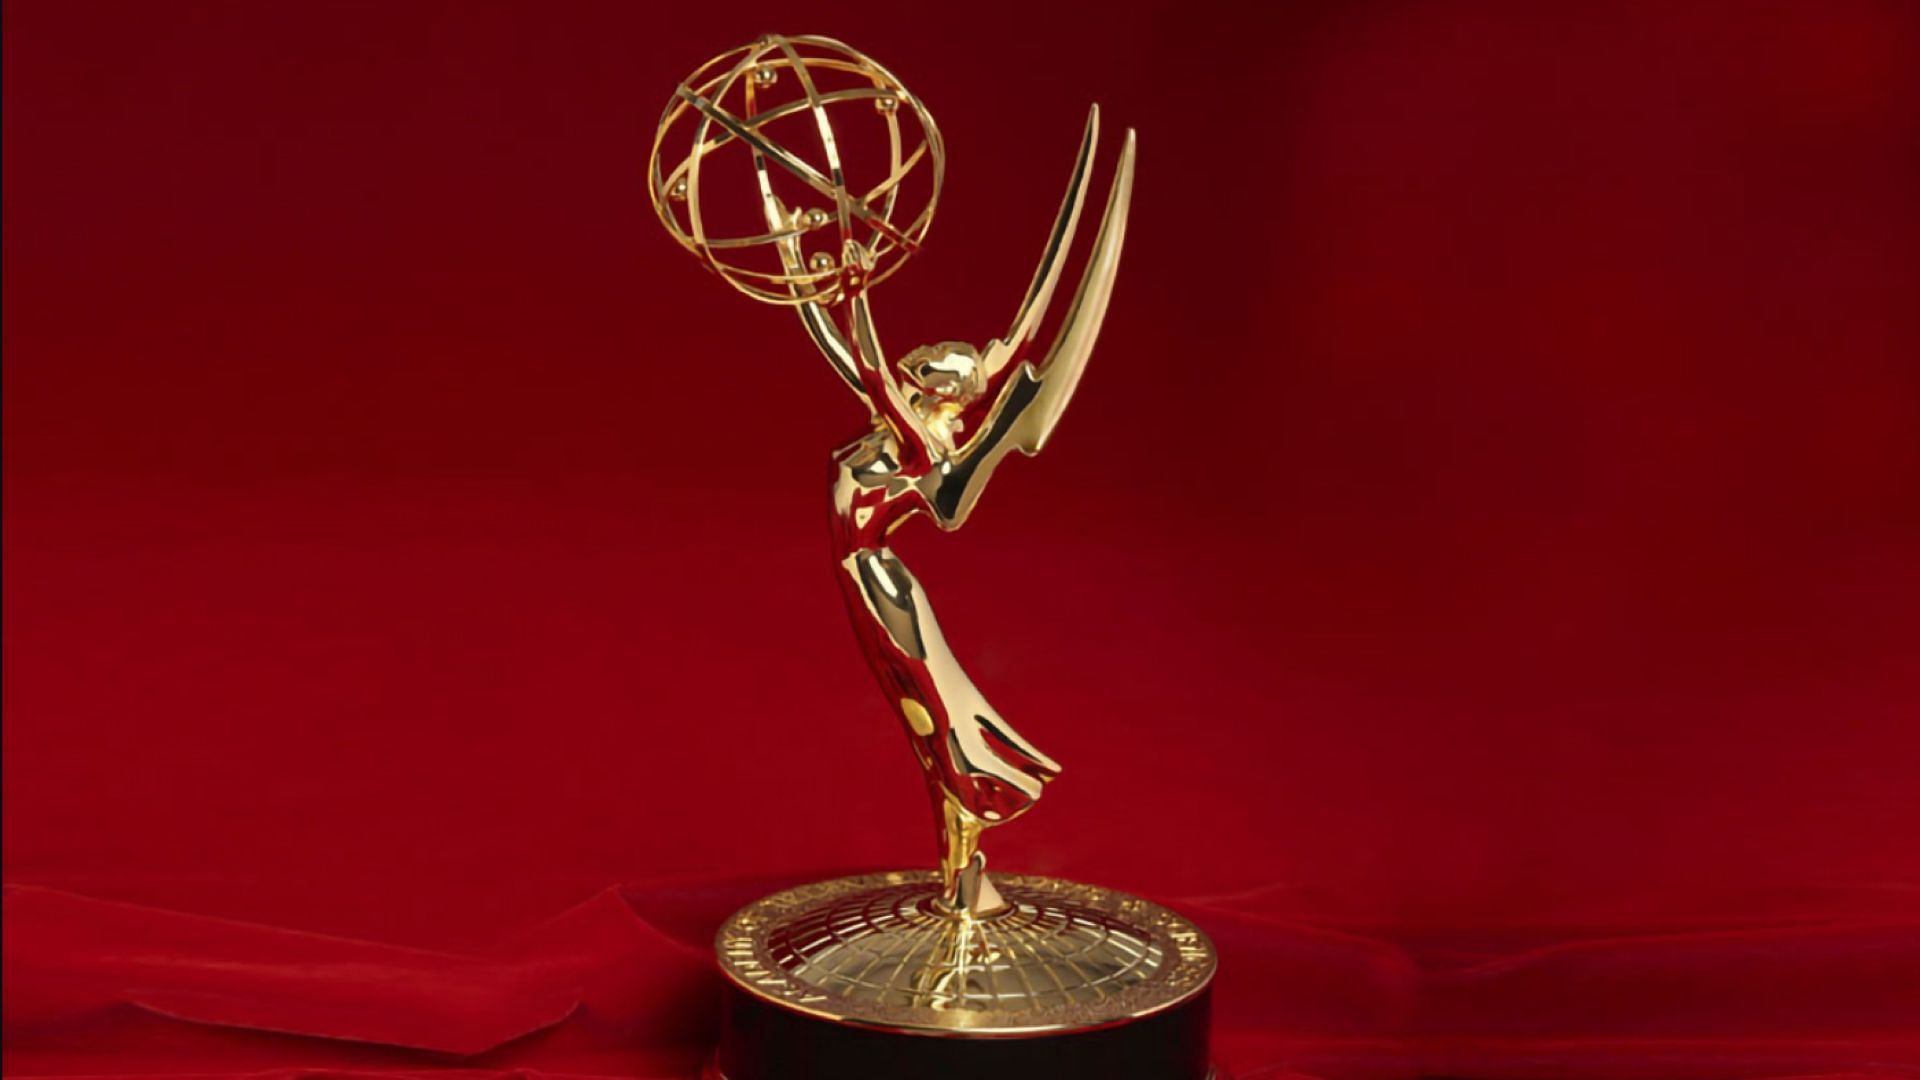 The Emmy Award (Image via Television Academy)